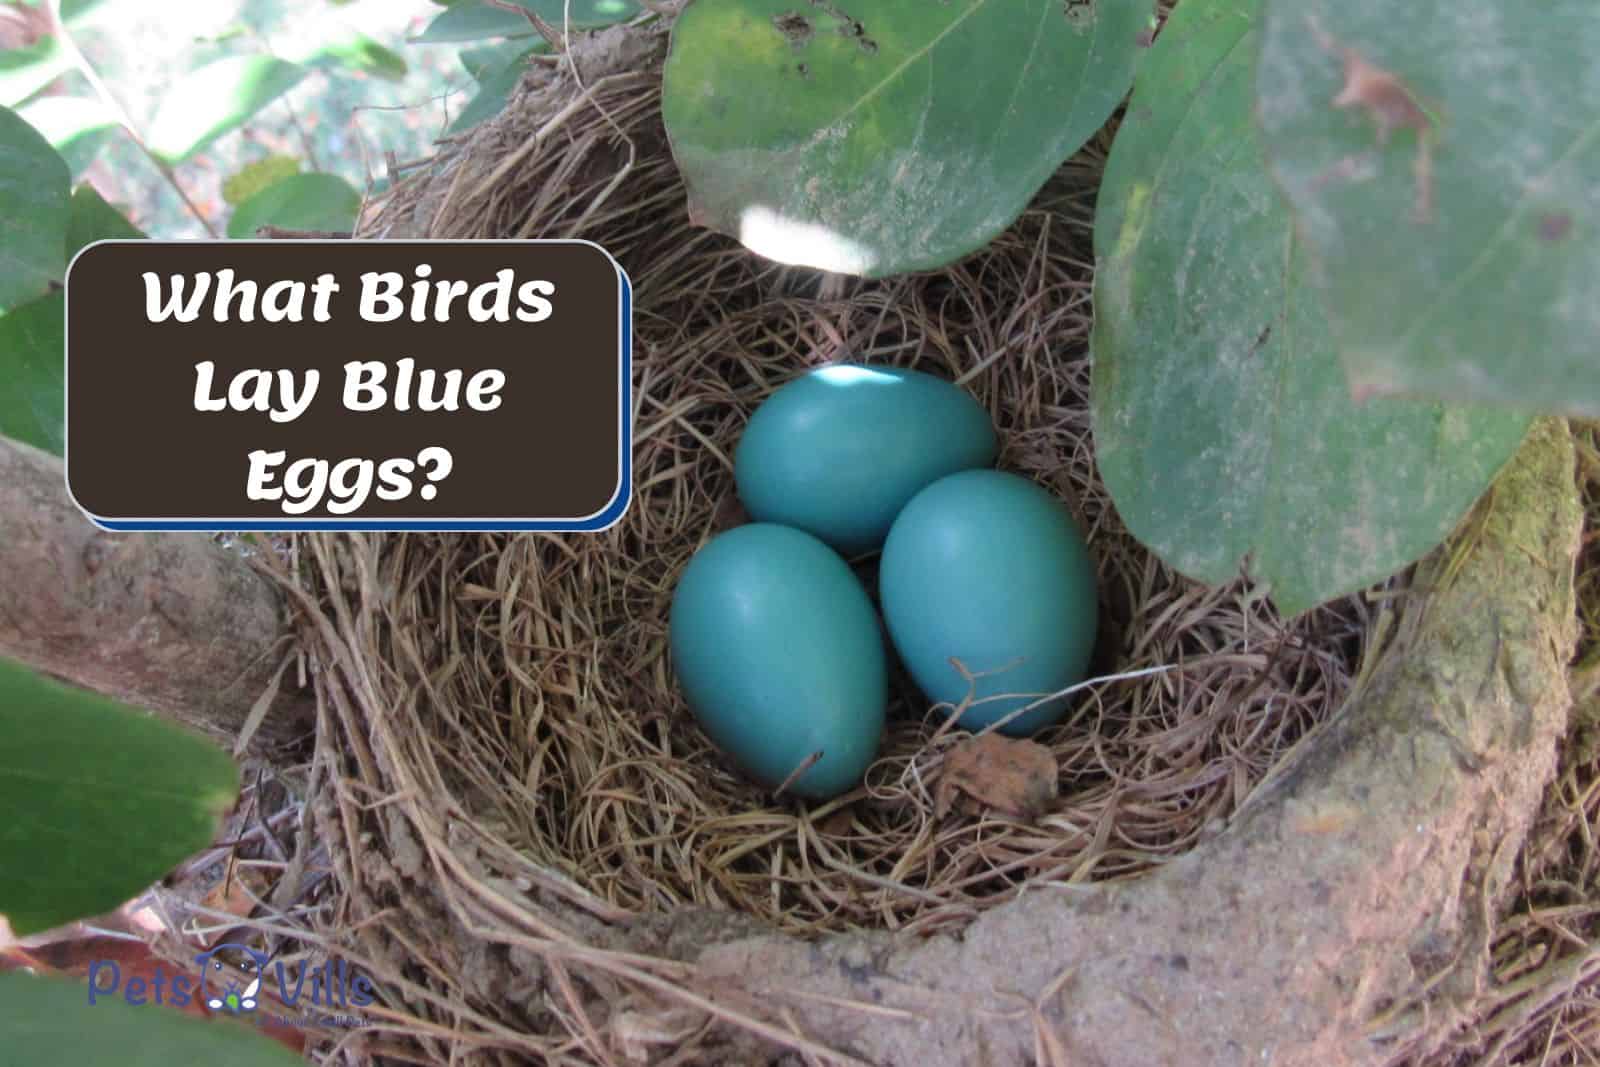 3 blue eggs on the nest